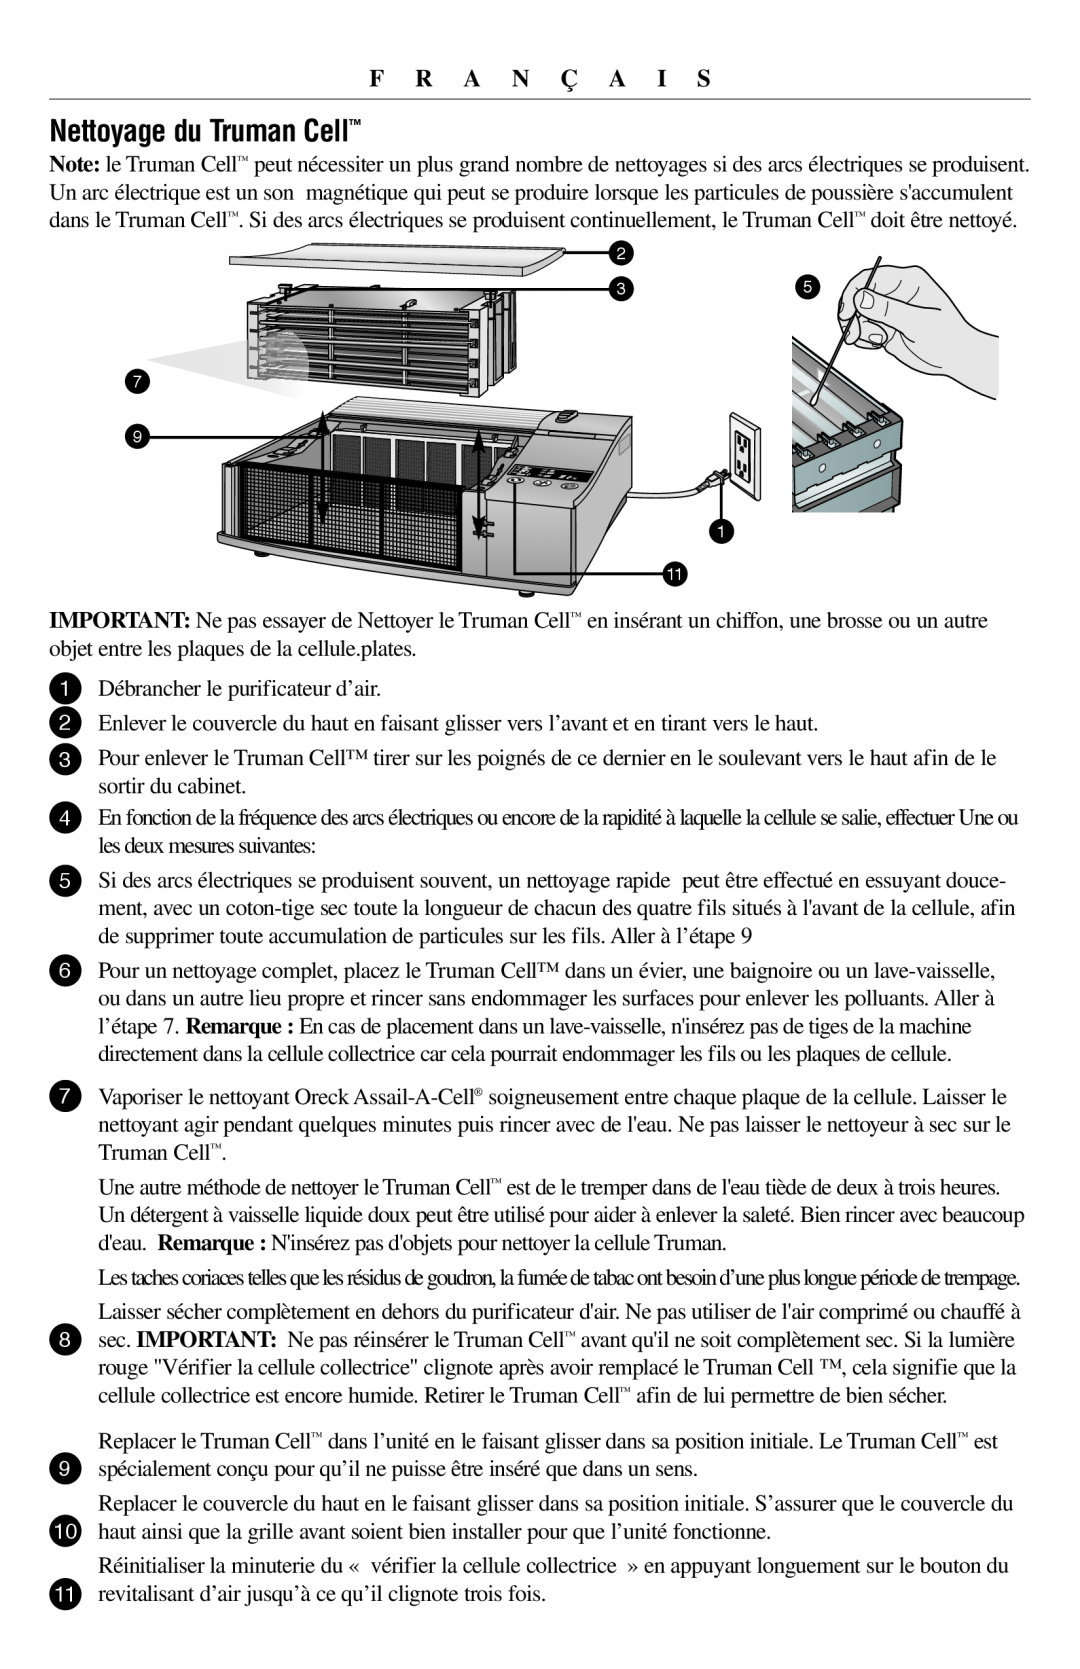 Oreck 21057-03 manual Nettoyage du Truman Cell, F R A N Ç A I S 